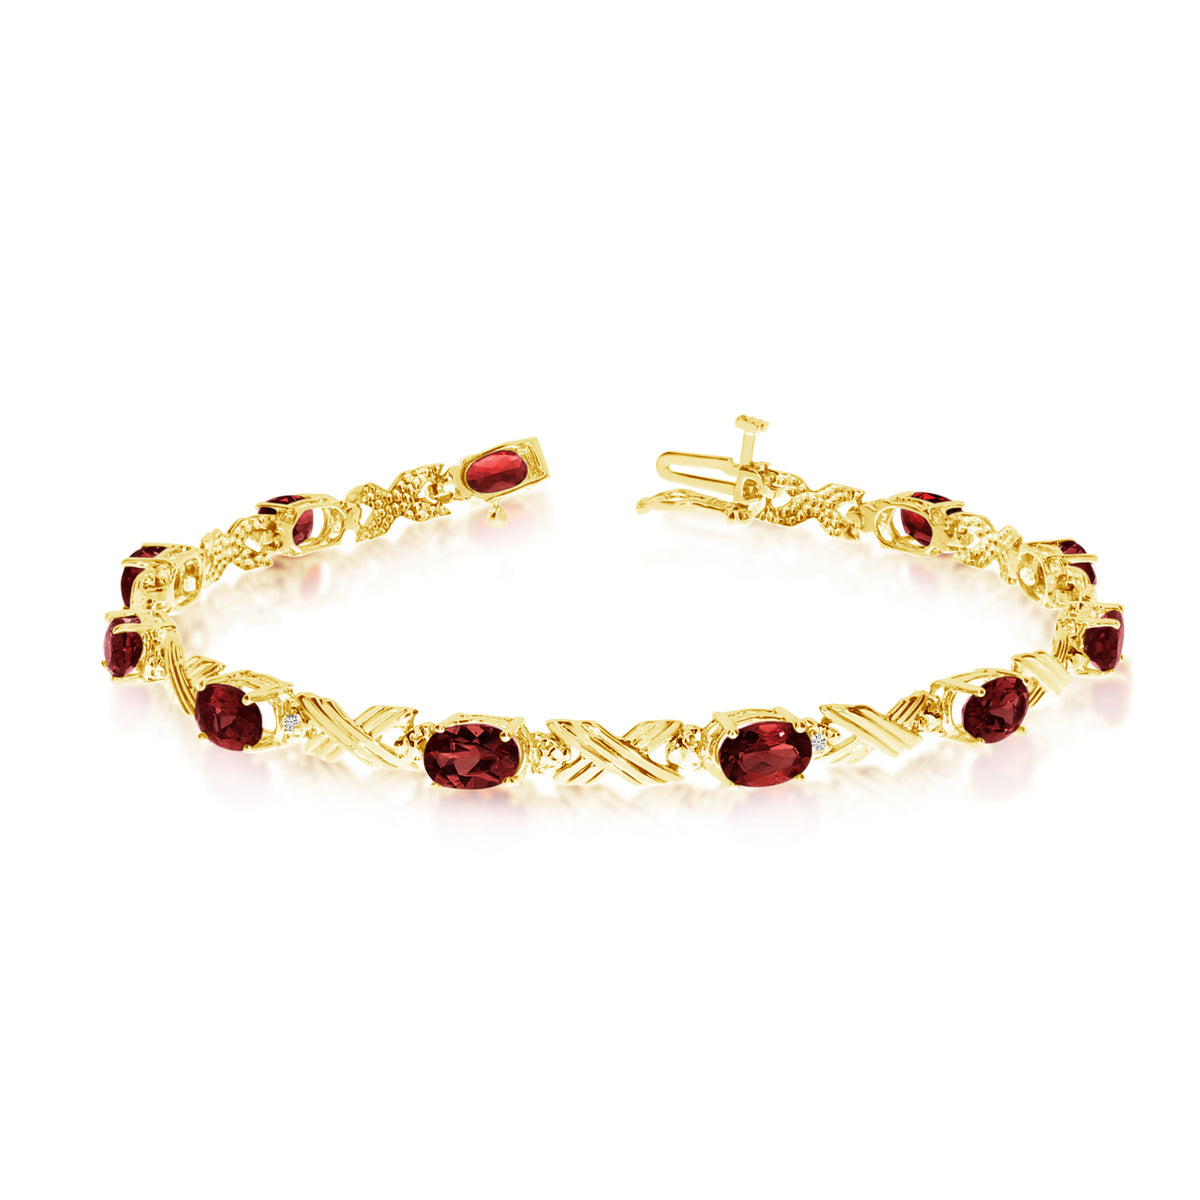 10K Yellow Gold Oval Garnet Stones And Diamonds Tennis Bracelet, 7" fine designer jewelry for men and women